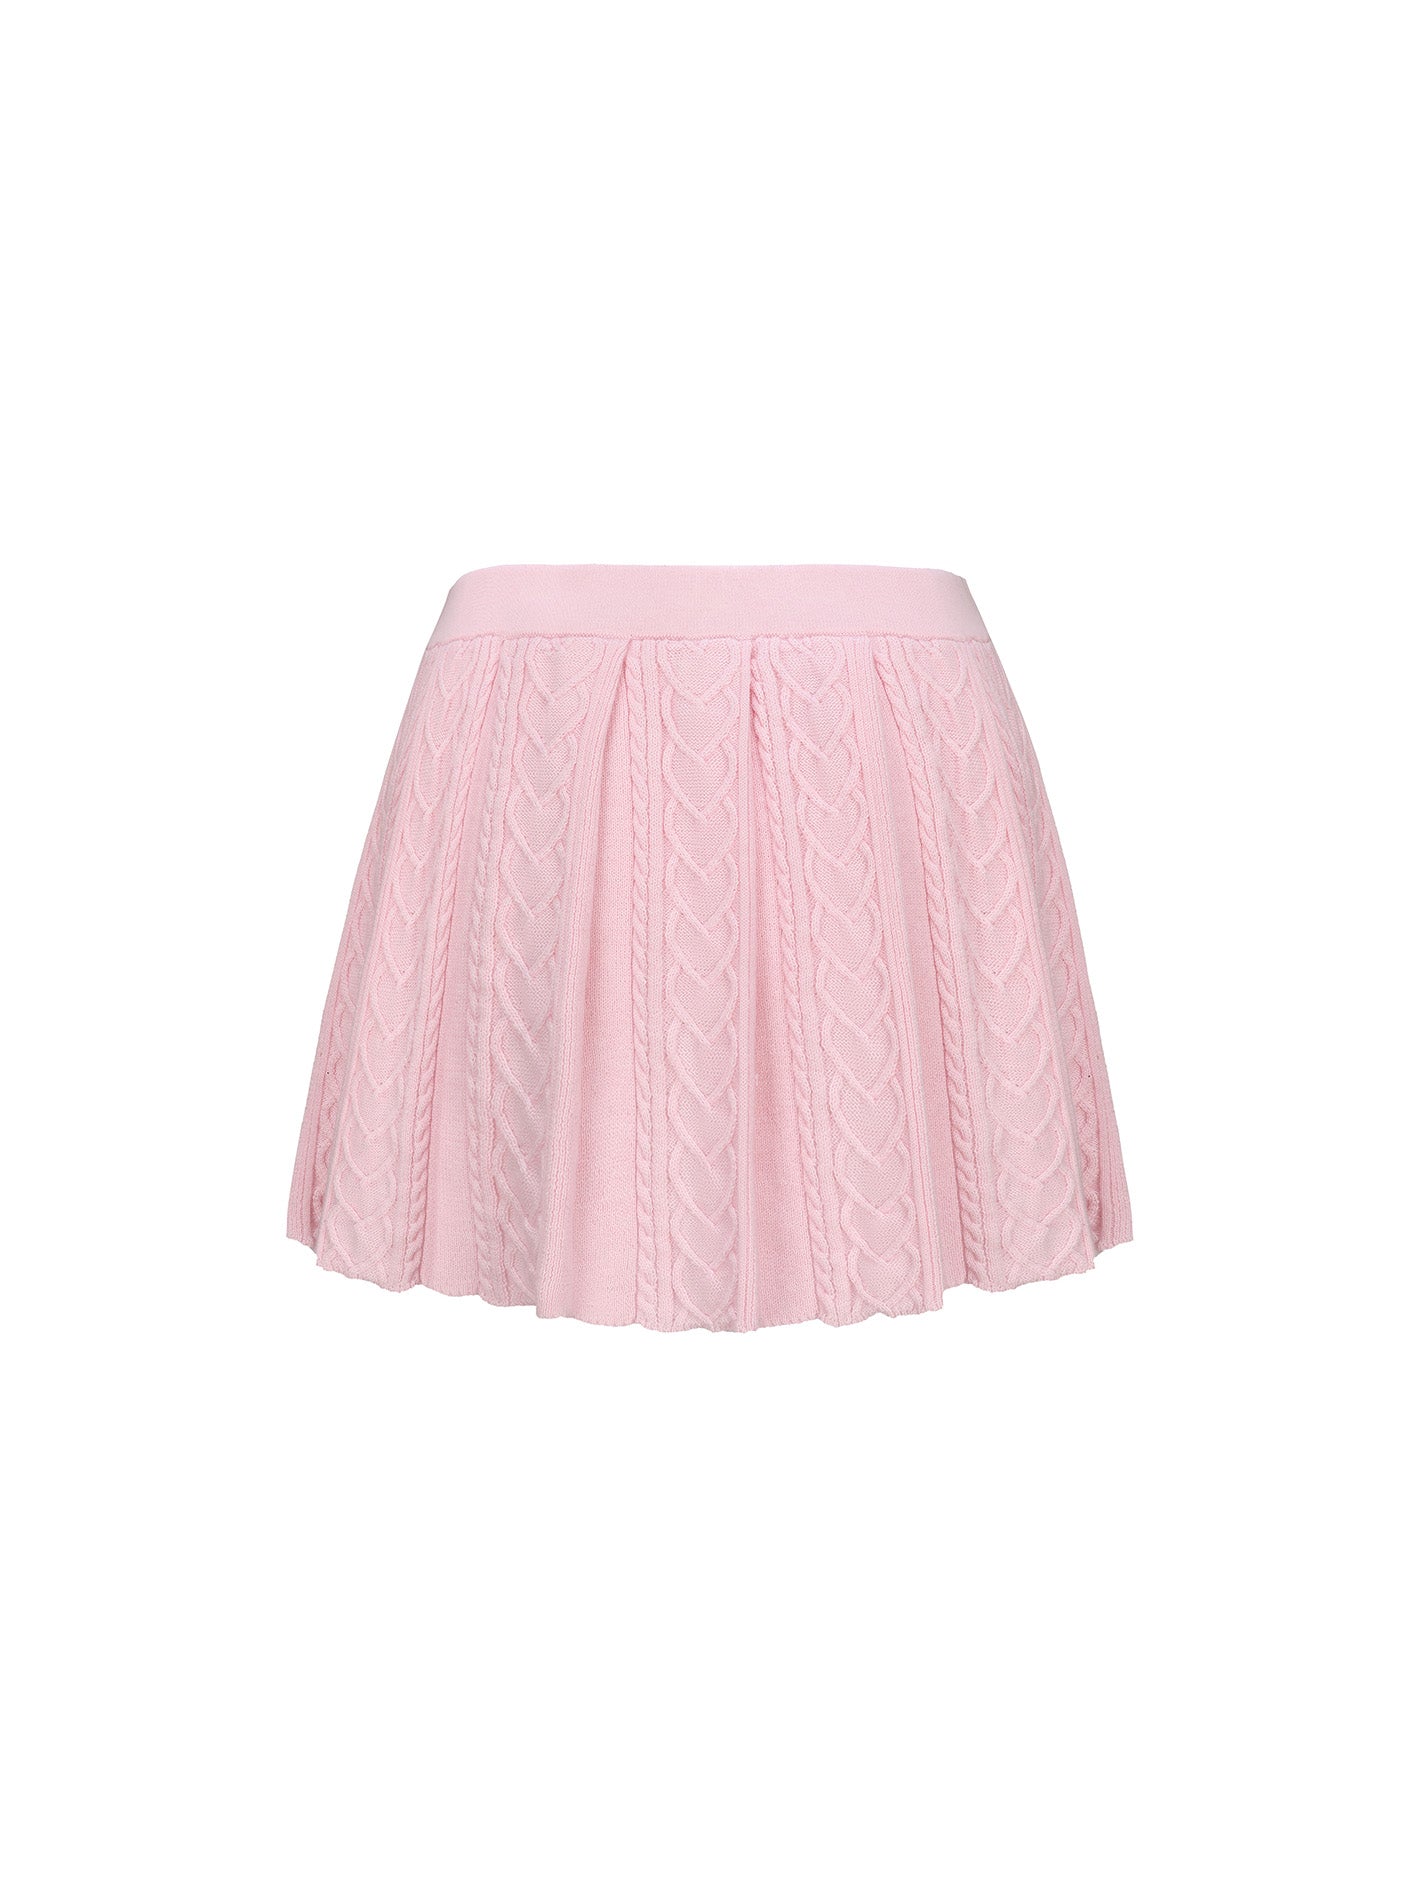 Jailina Knit Set (Pink)